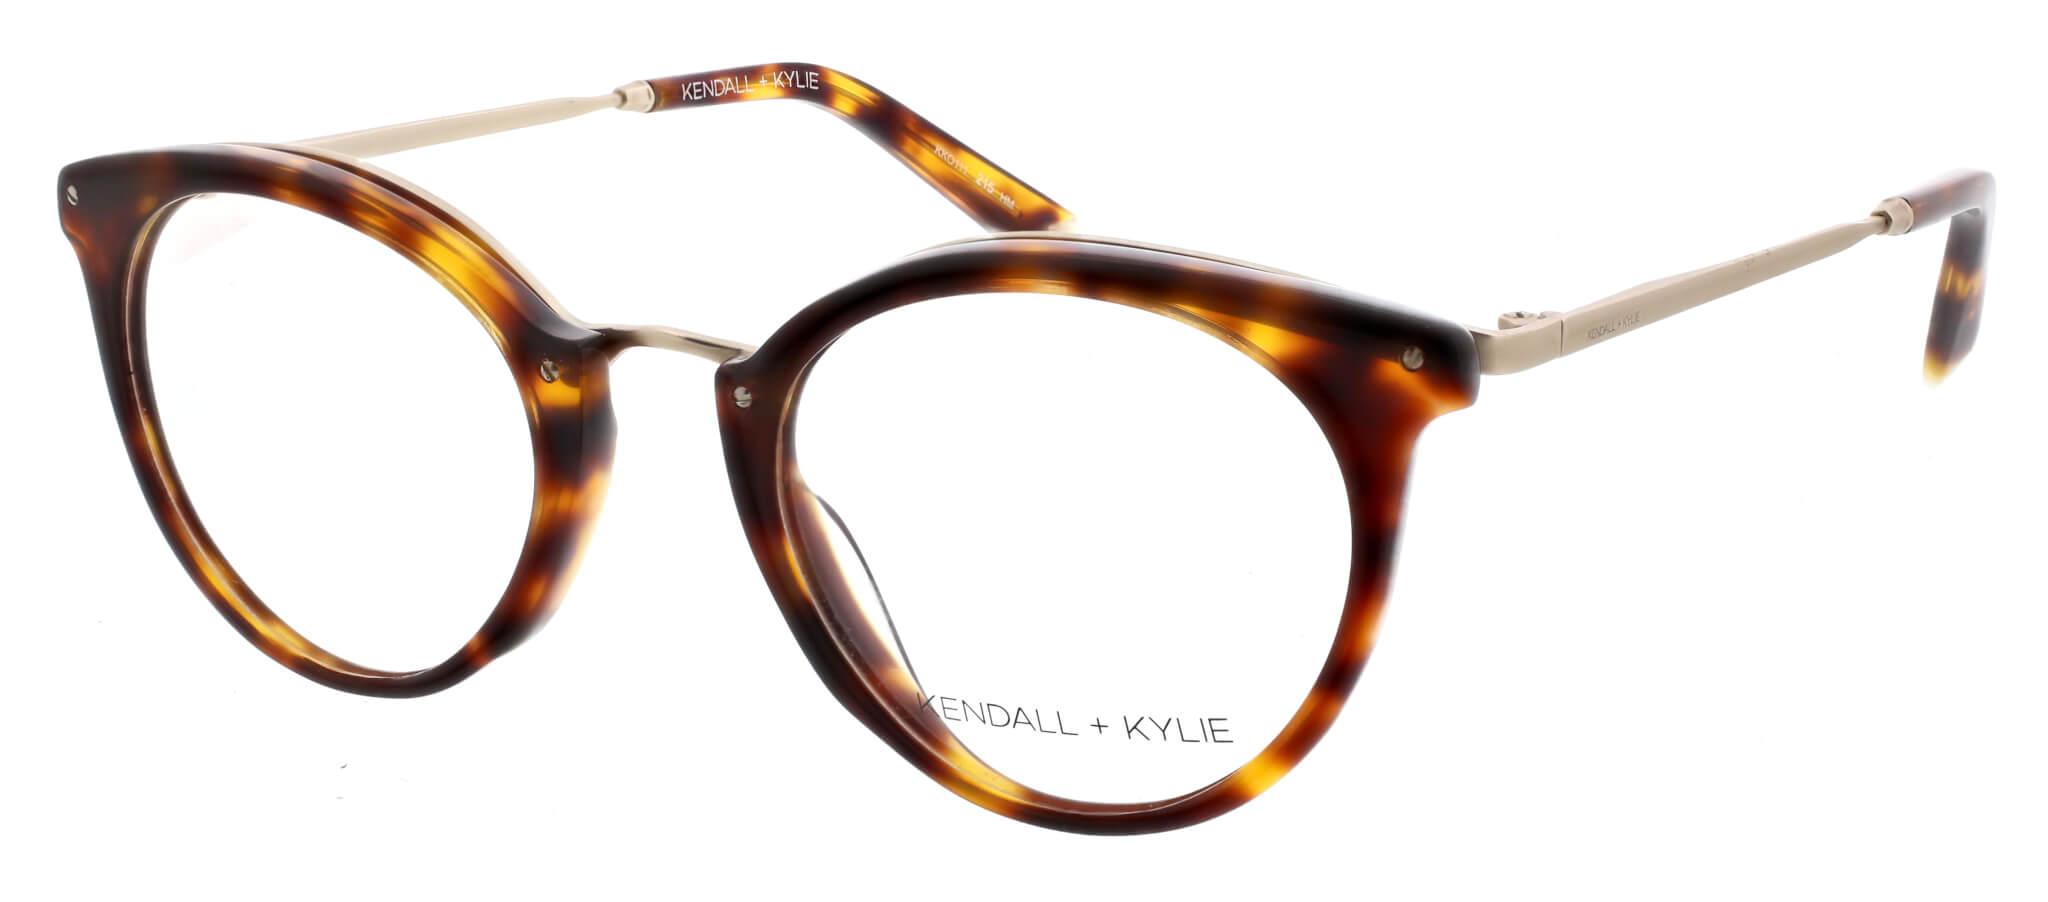 Kendall/Kylie  Shopko Optical